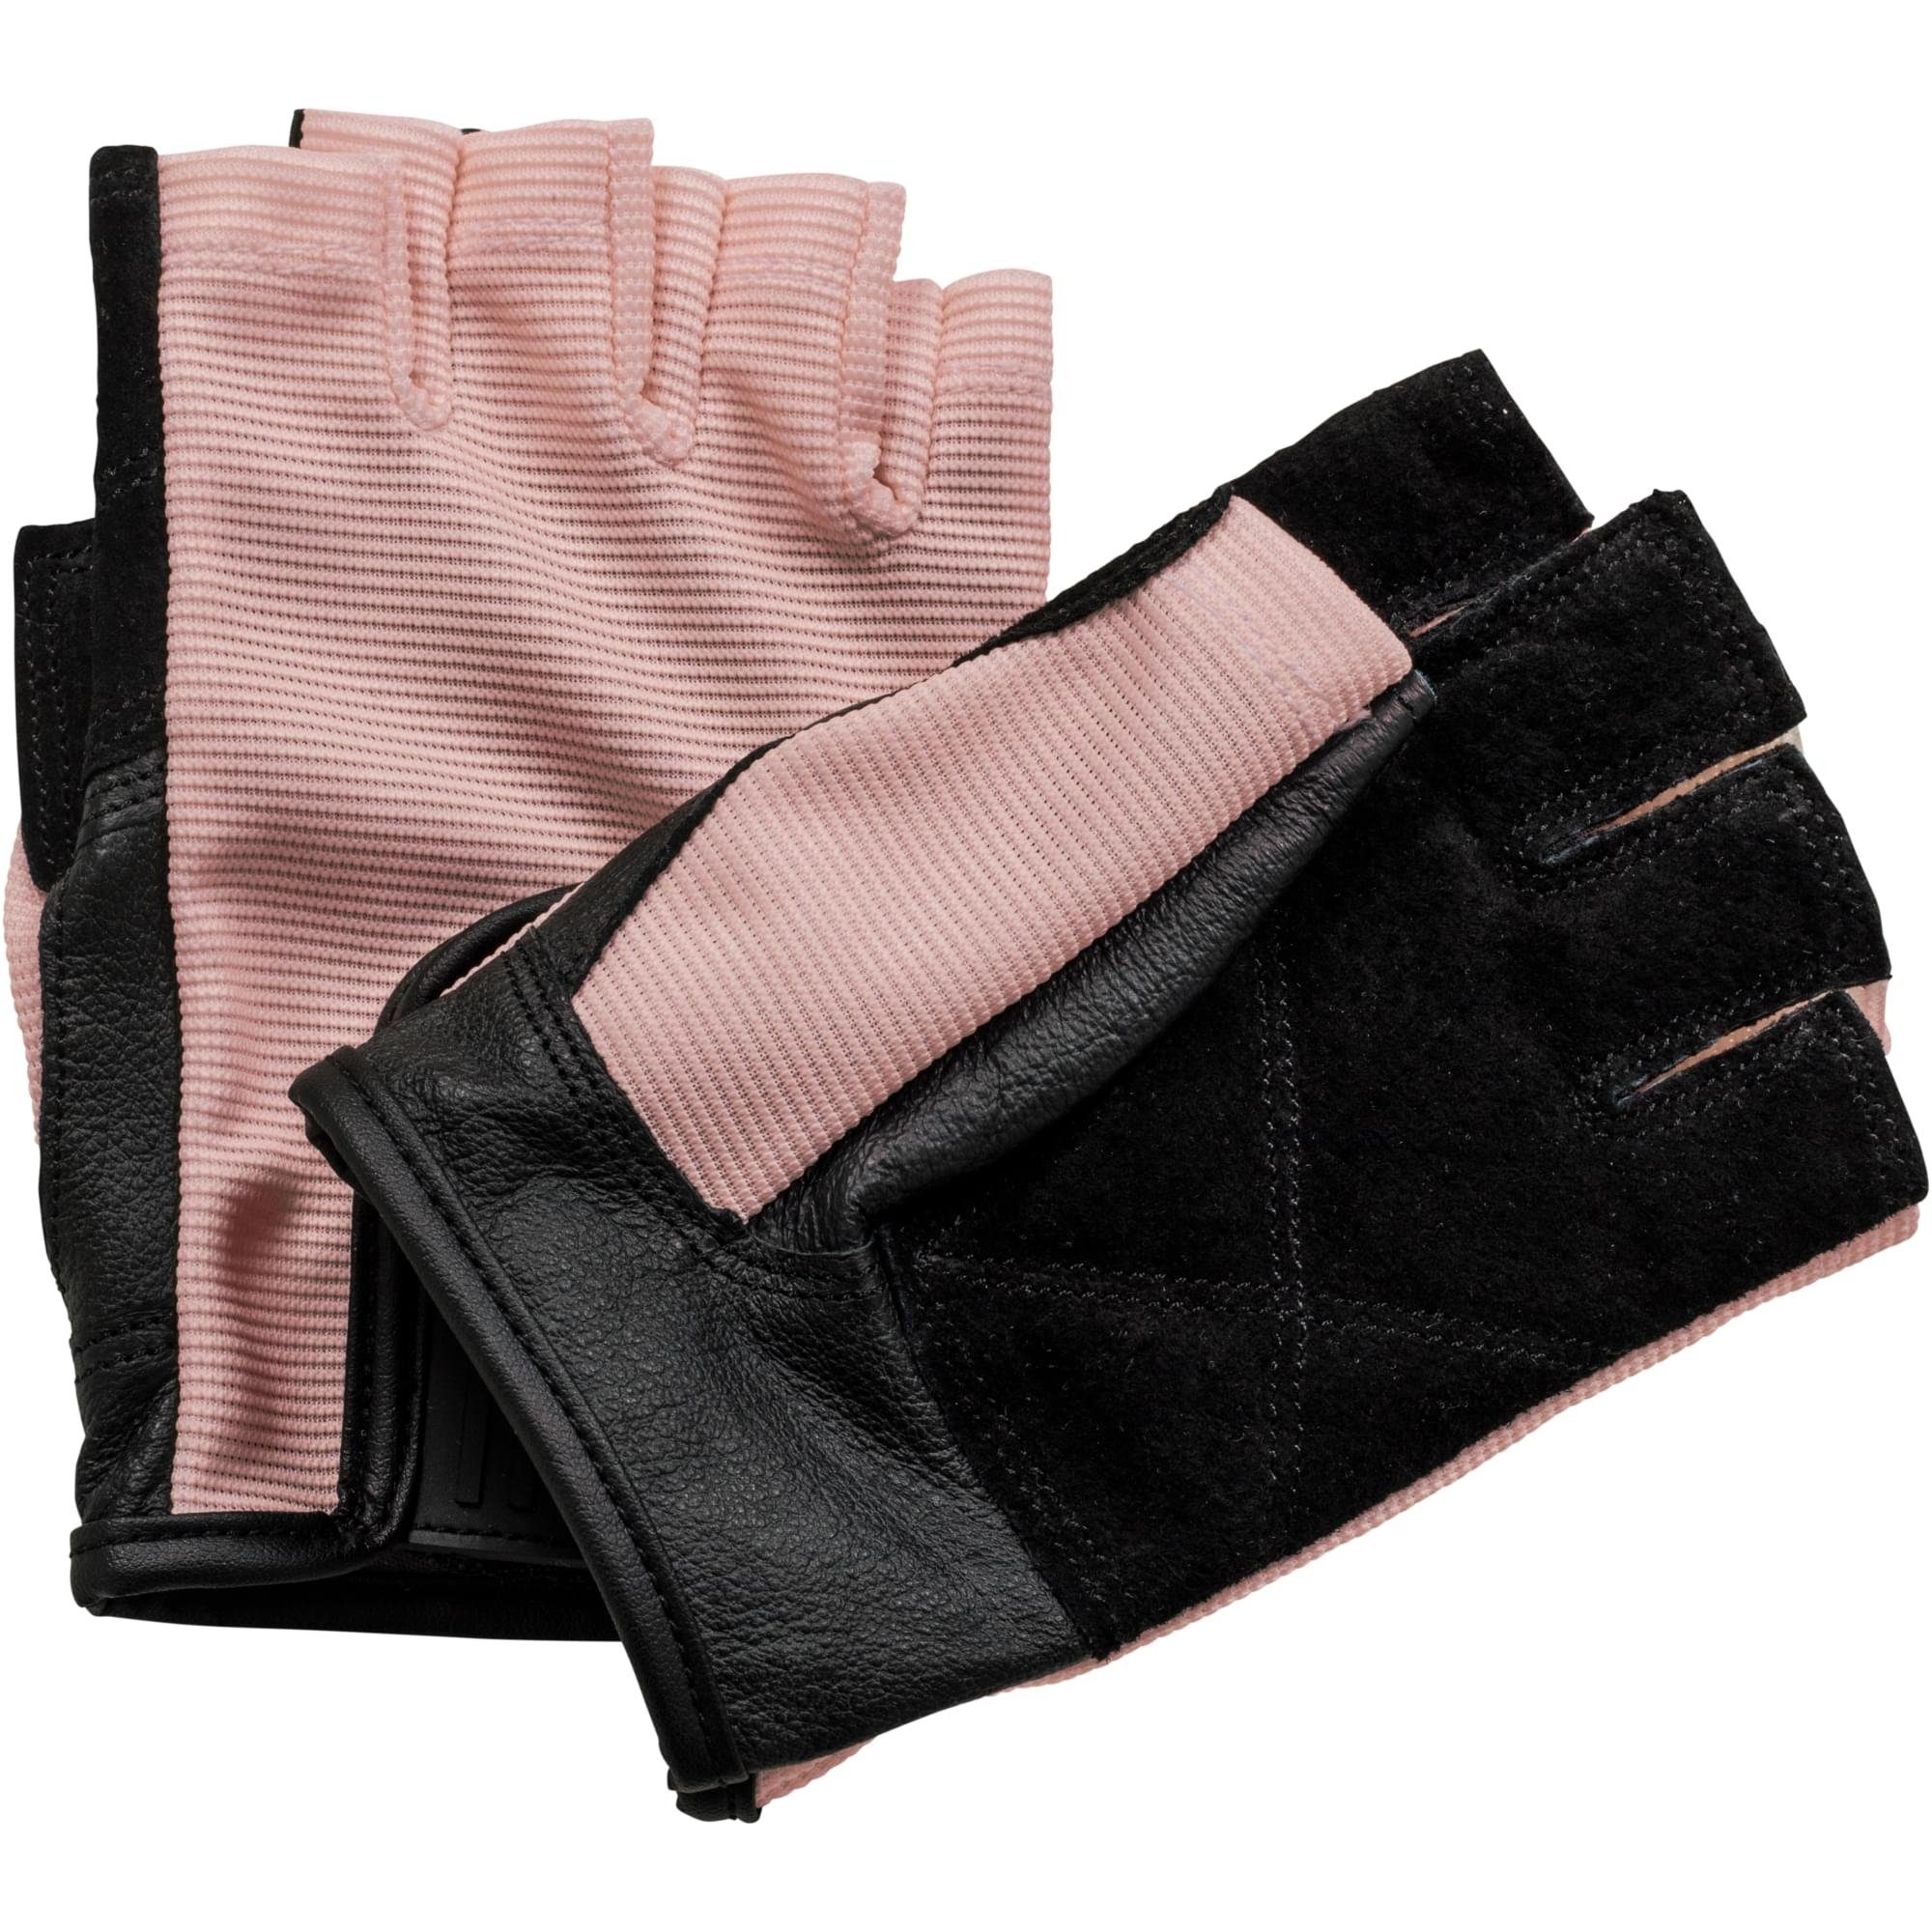 GORILLA SPORTS Trainingshandschuhe Farbwahl Rosa - Handschuhe Fitness - Sporthandschuhe Leder, XS/S/M/L/XL